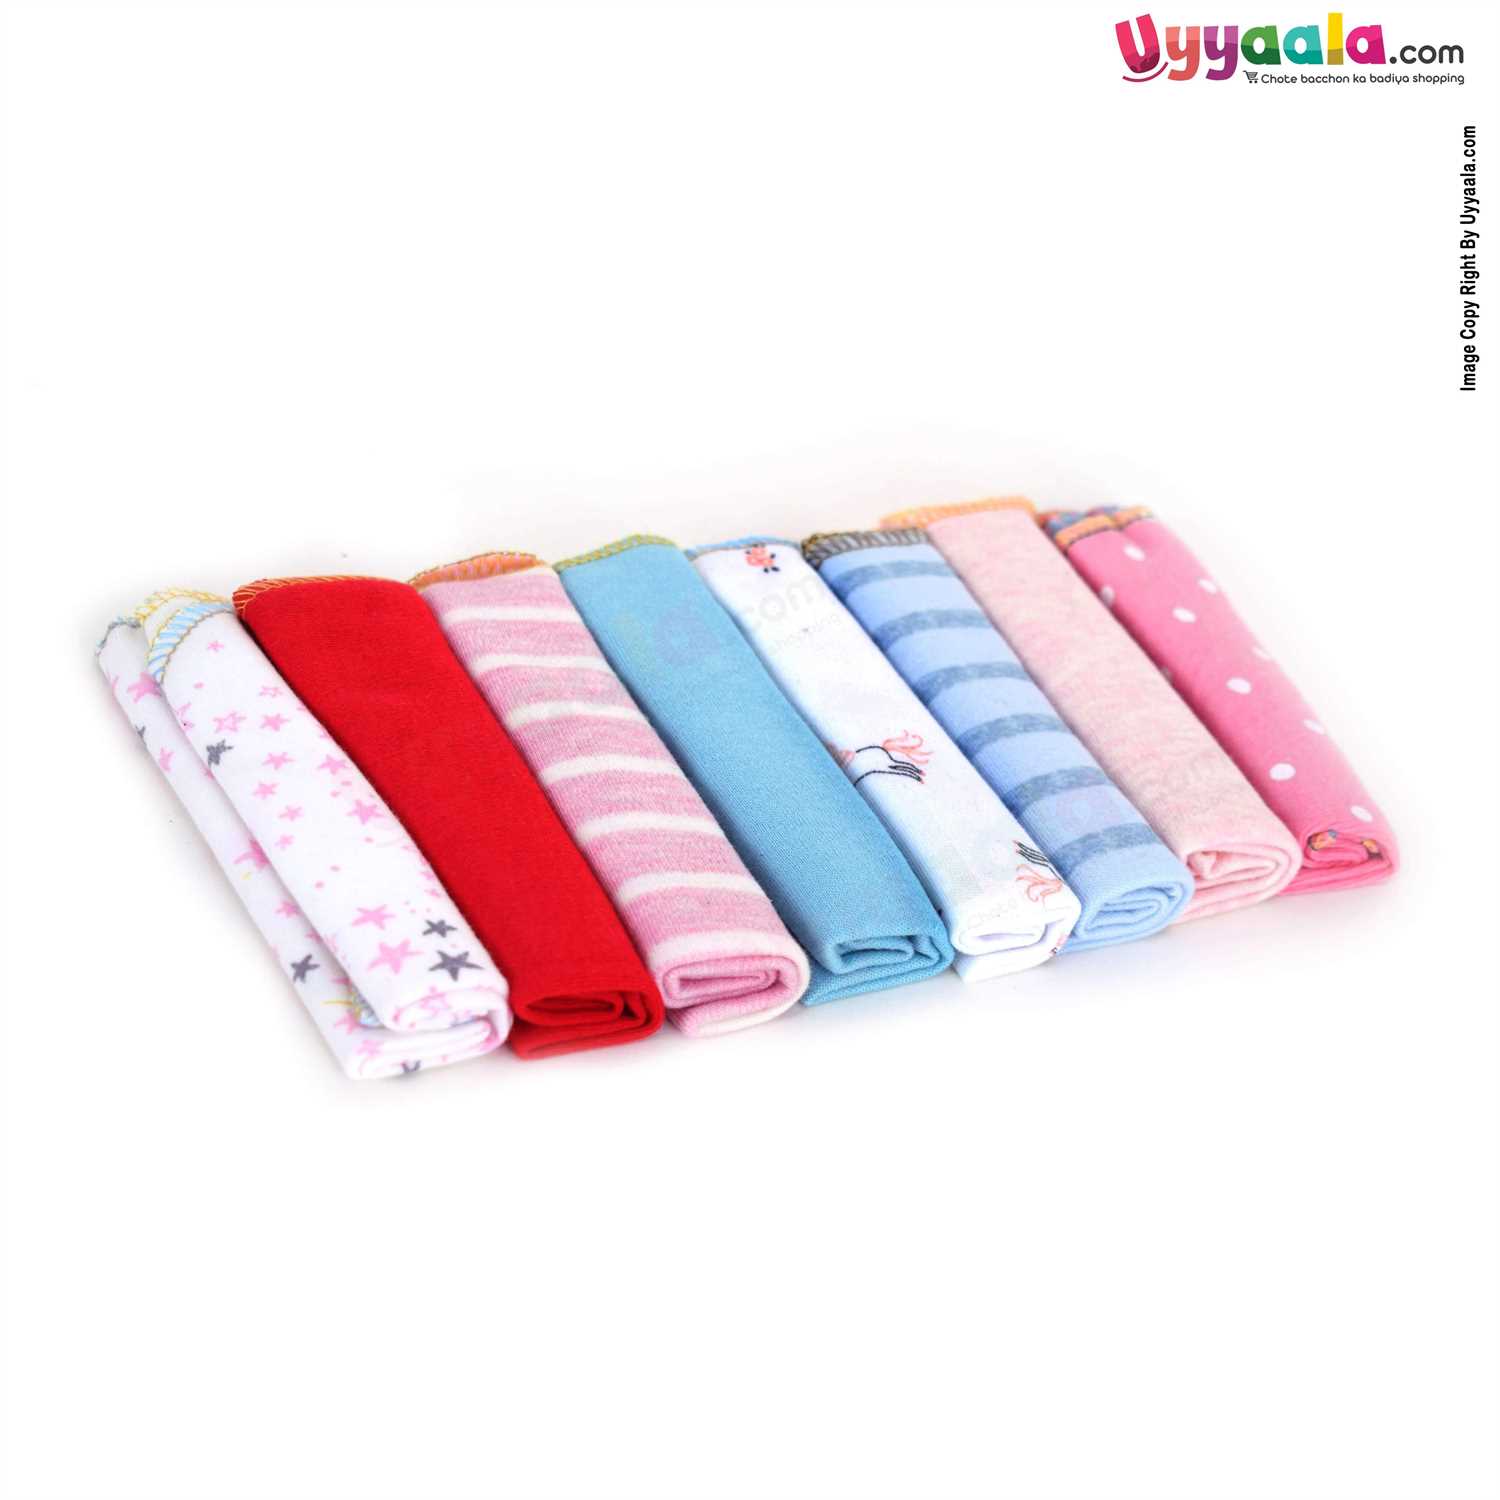 GERBER Baby Wash Cloth (Napkins) Pack of 8 - Multi-Color